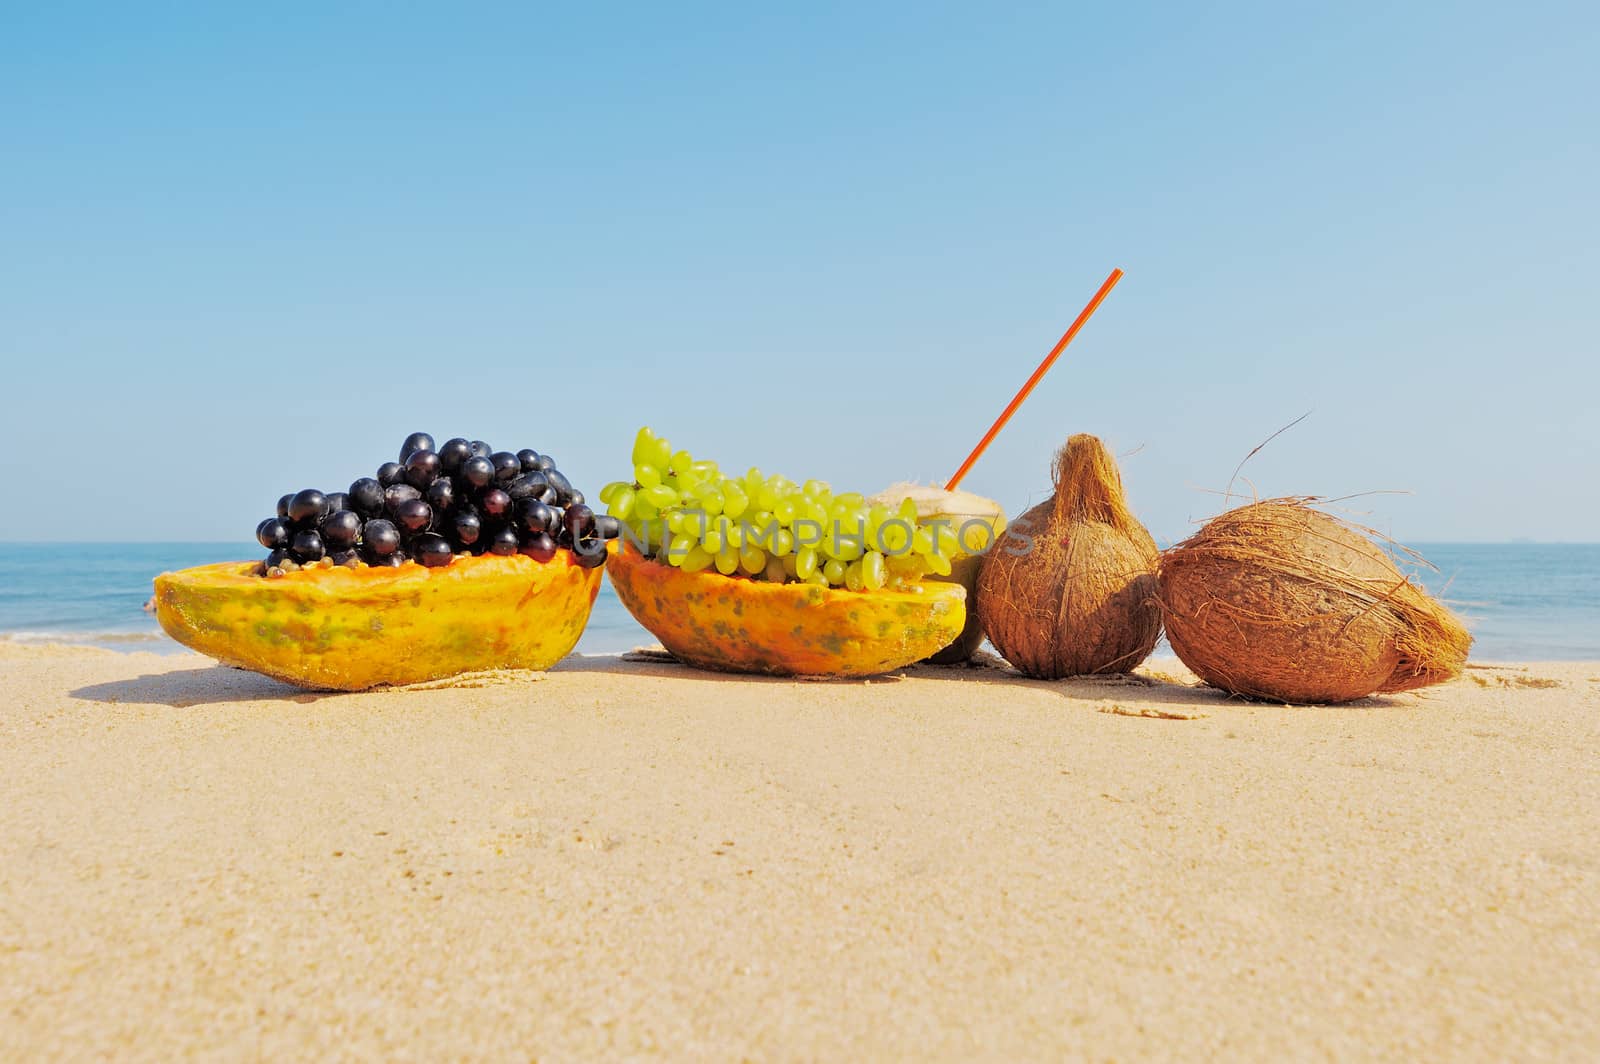 Fruit on beach by styf22